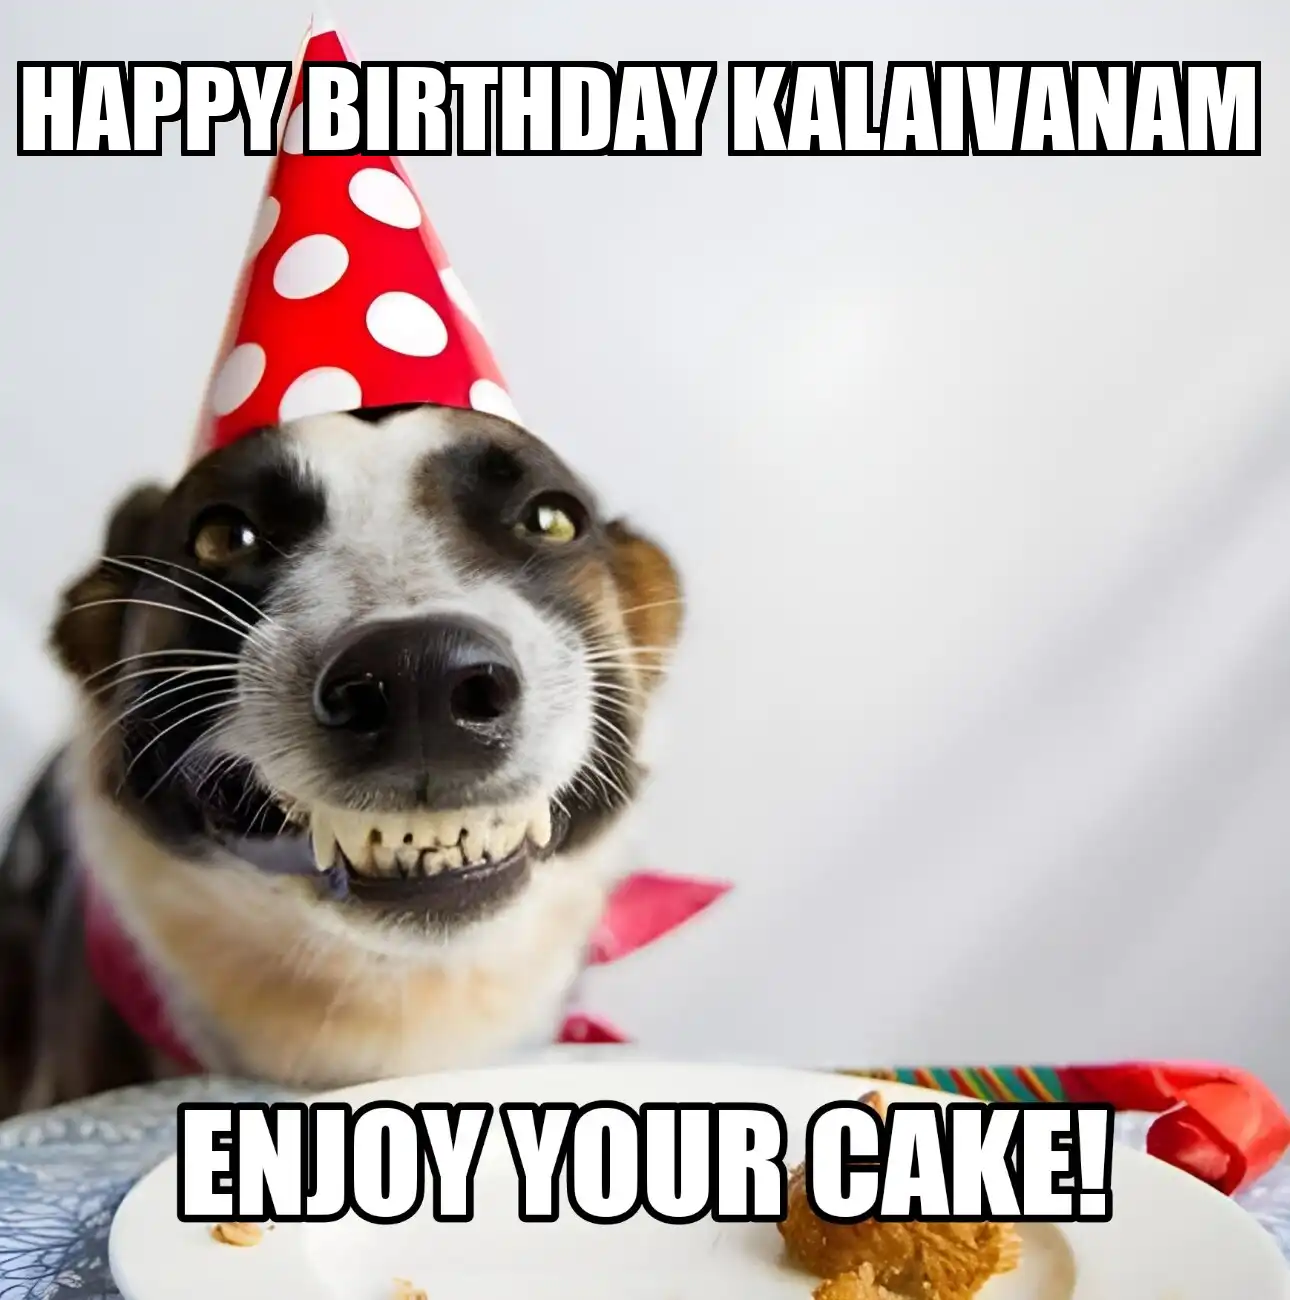 Happy Birthday Kalaivanam Enjoy Your Cake Dog Meme